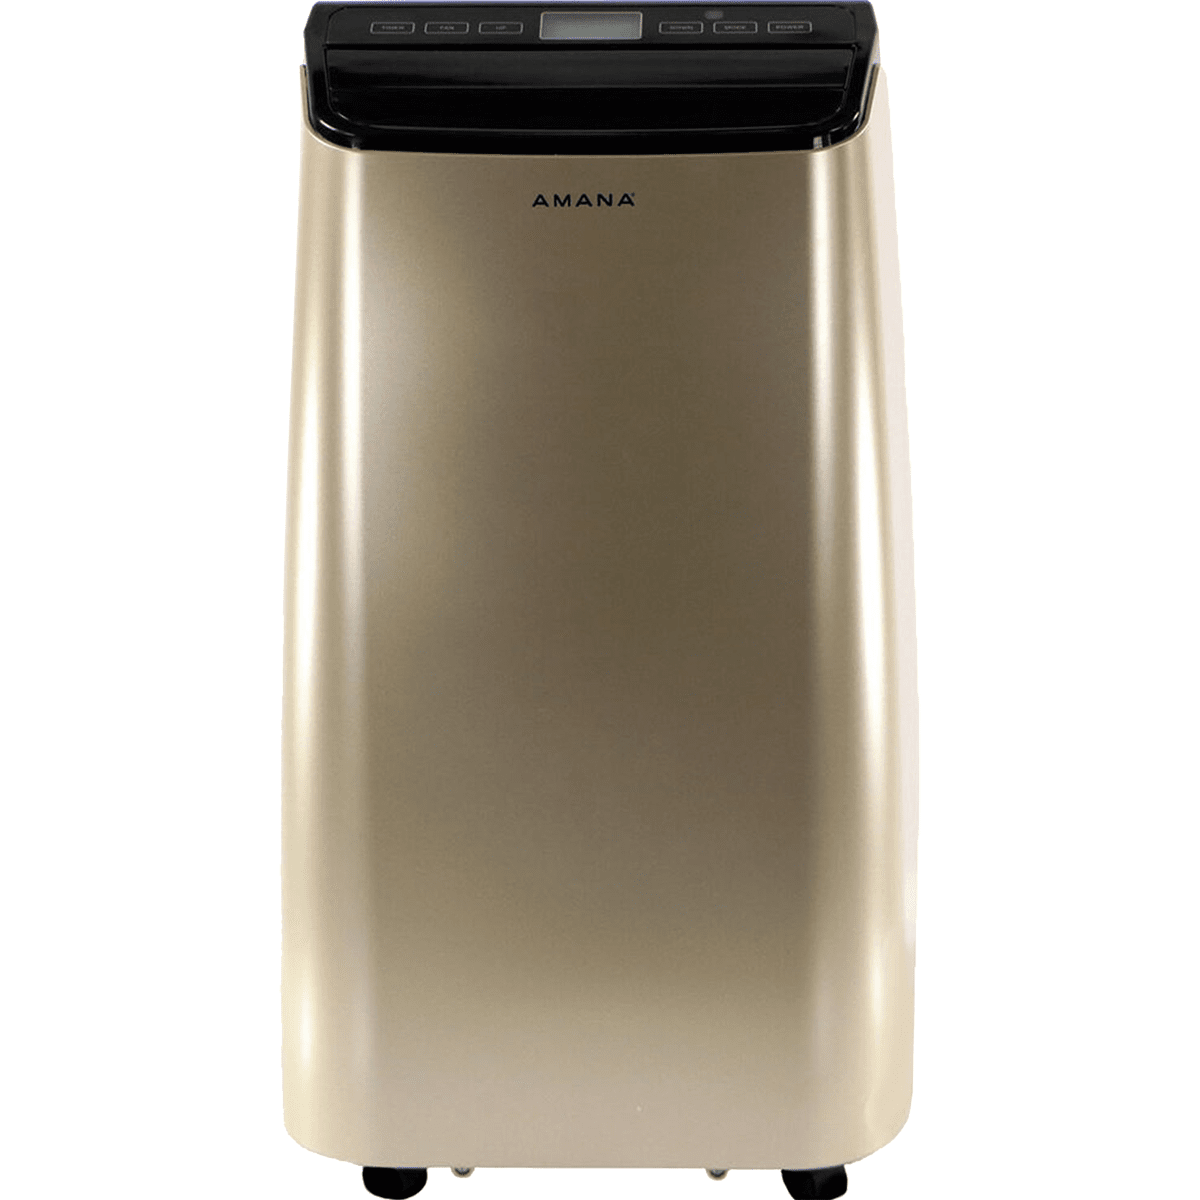 Amana 12,000 BTU Portable Air Conditioner-Gold